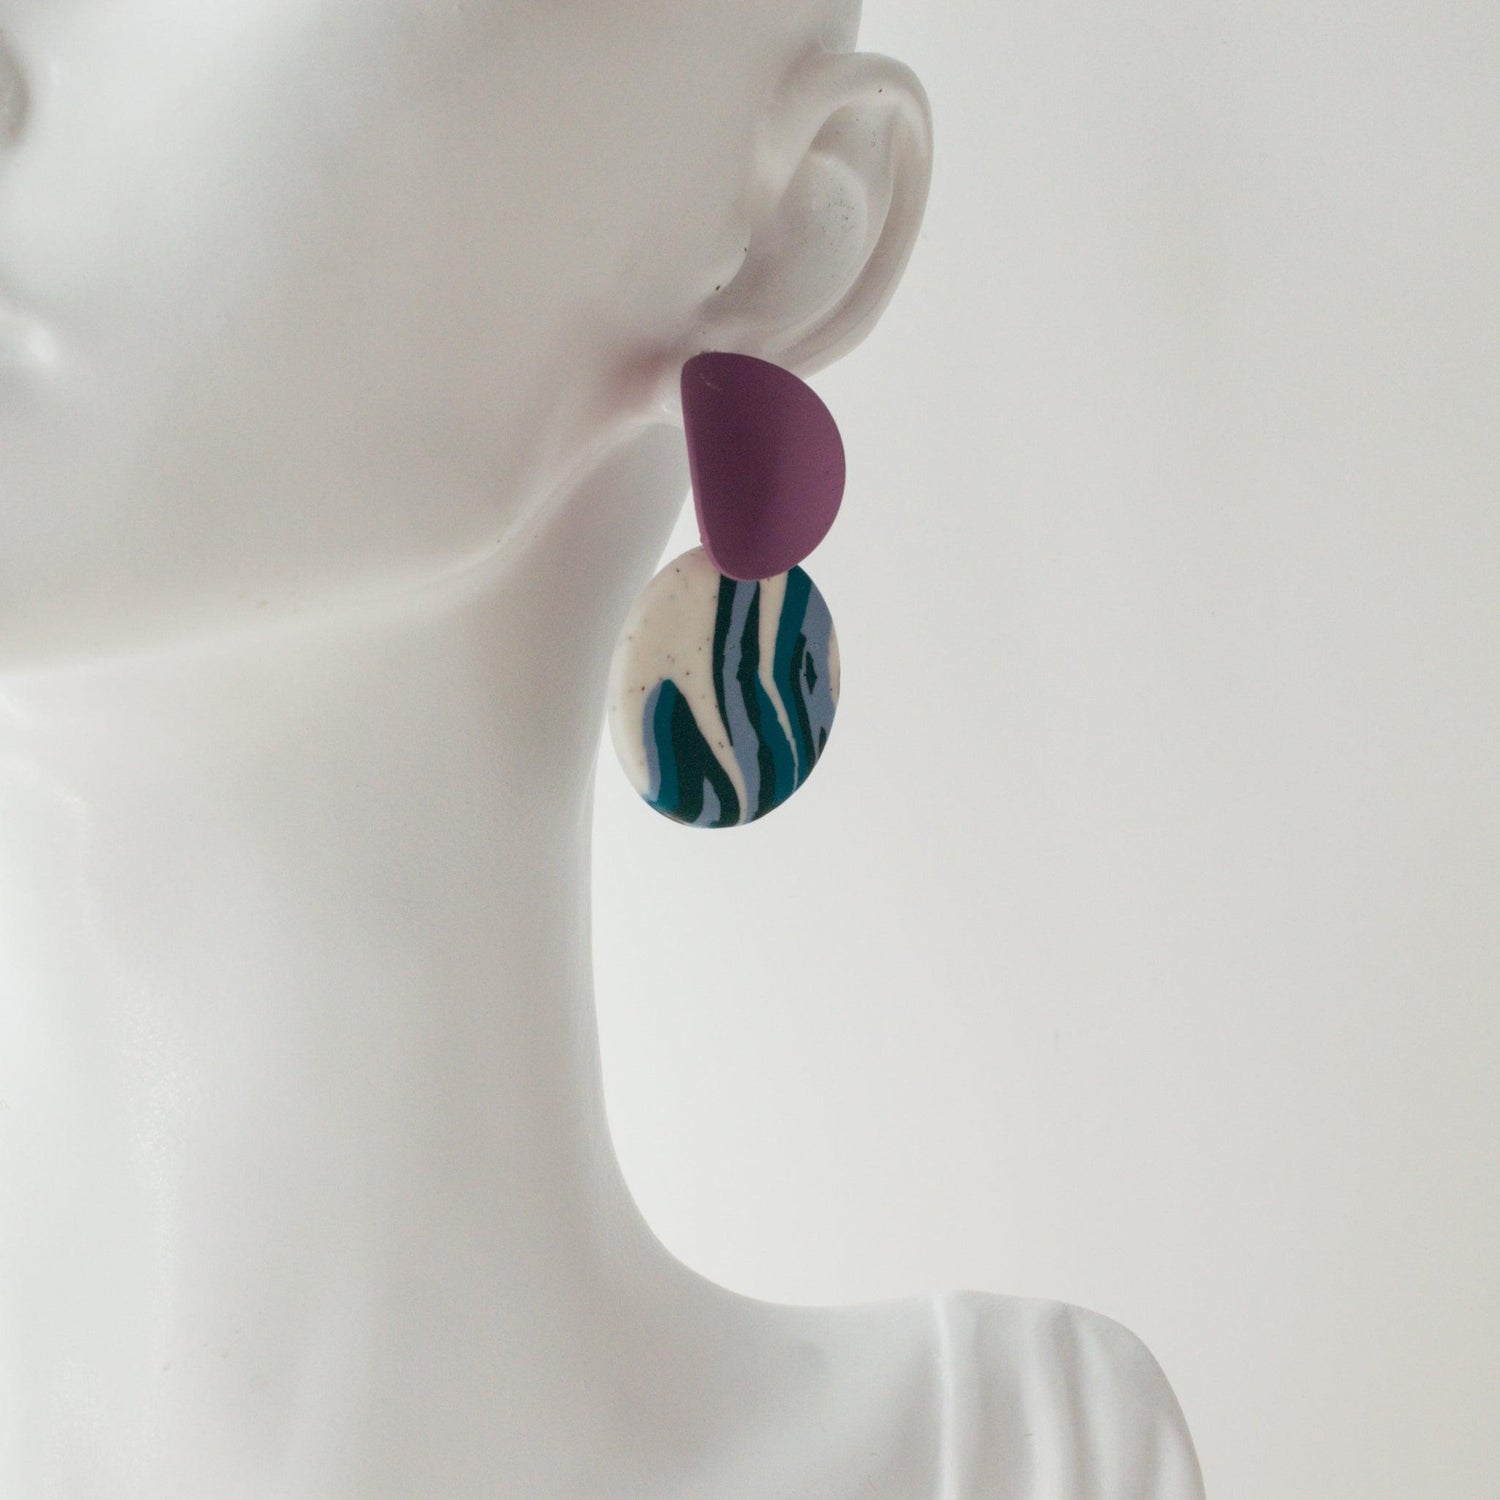 Colorblock Polymer Clay Earrings - avantejewel.com